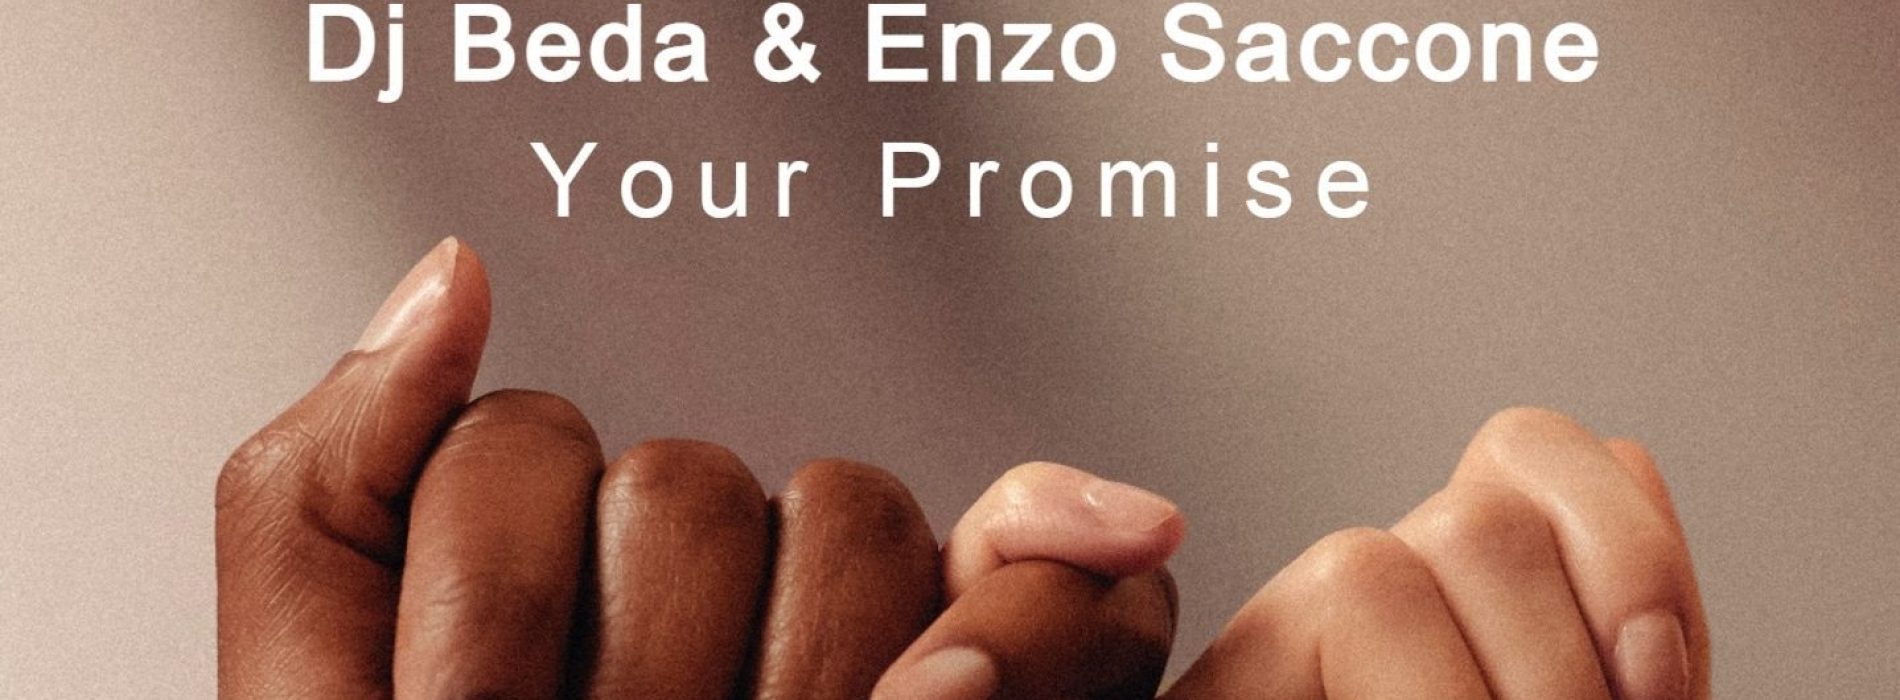 Your Promise, il nuovissimo disco Dj Beda ed Enzo Saccone